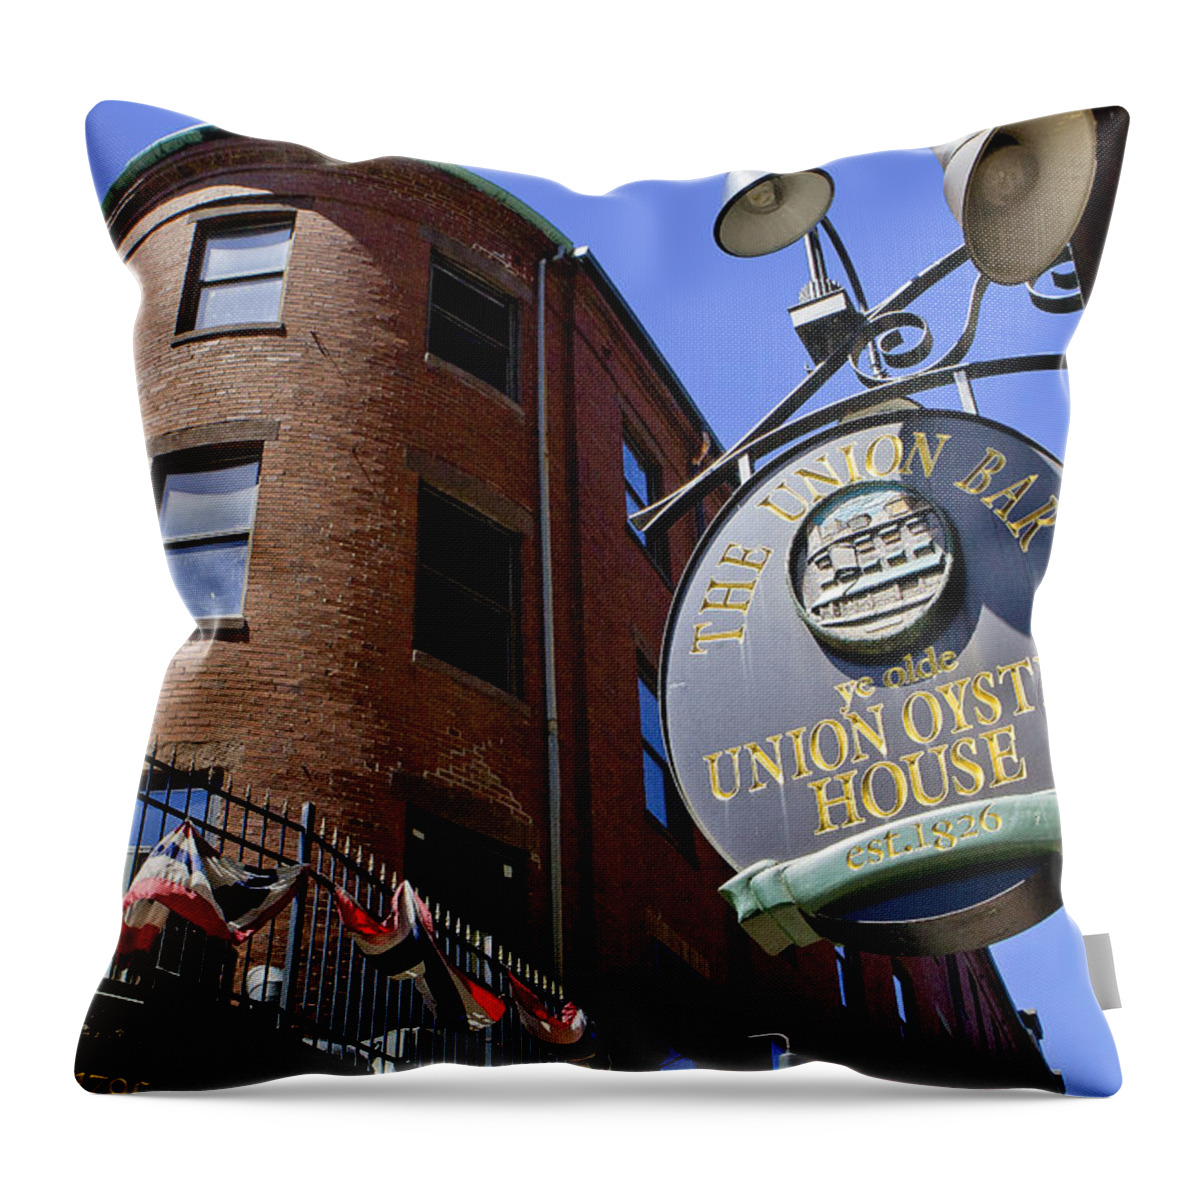 Estock Throw Pillow featuring the digital art Tavern & Seafood Restaurant, Boston, Ma by Claudia Uripos